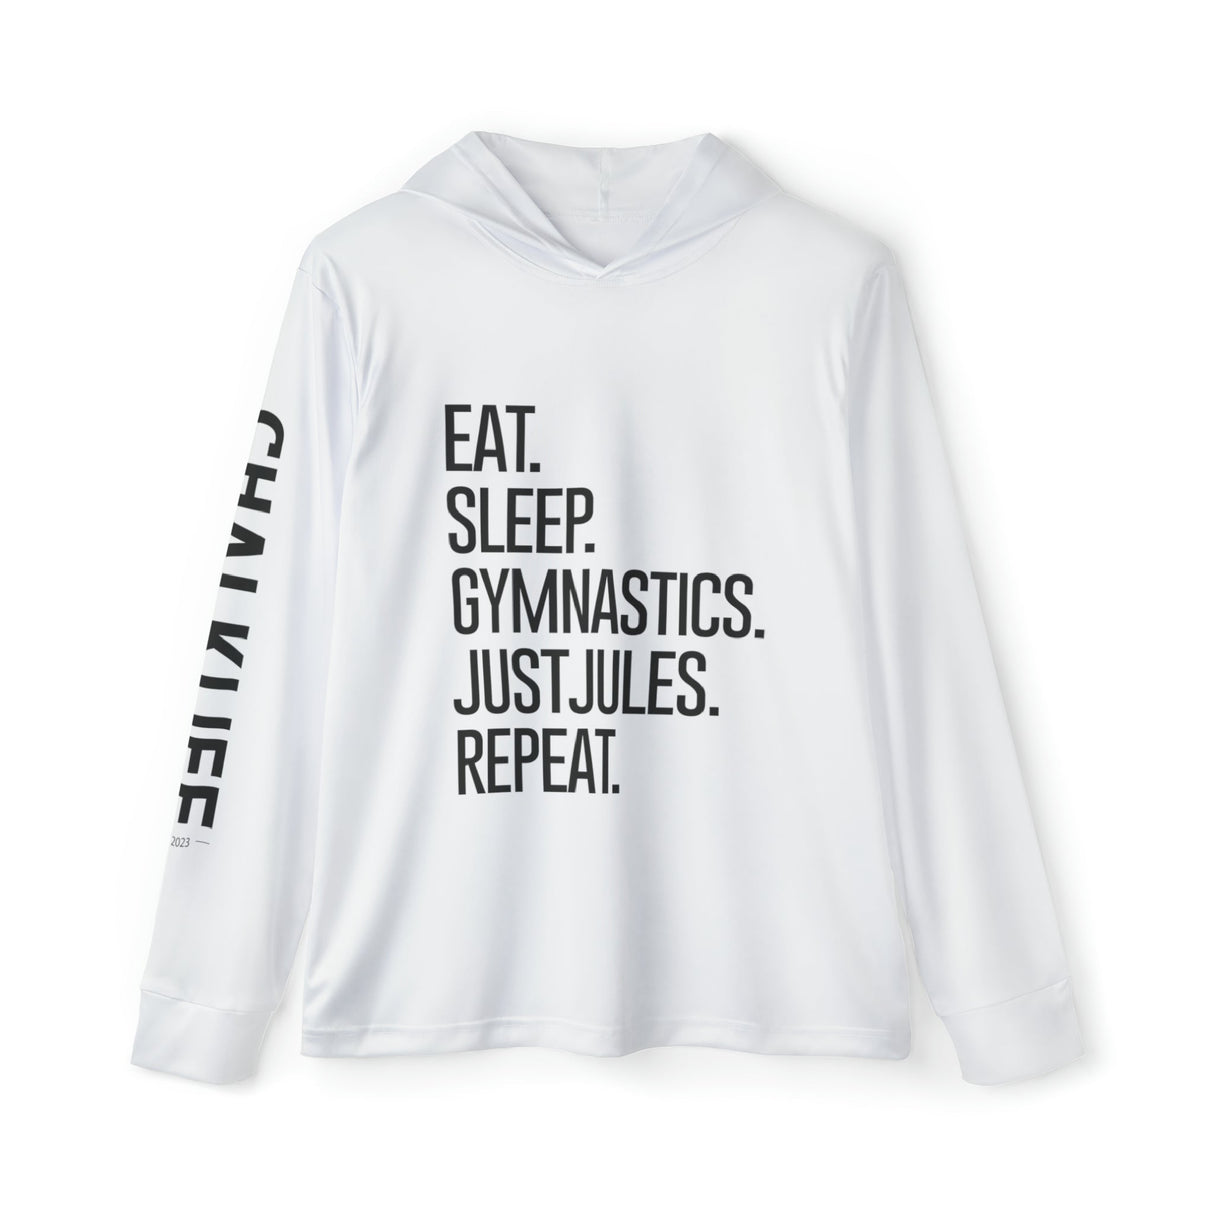 JUSTJULES - Eat. Sleep. Gymnastics. JustJules. Repeat. Performance Hoodie - White - Chalklife, LLC